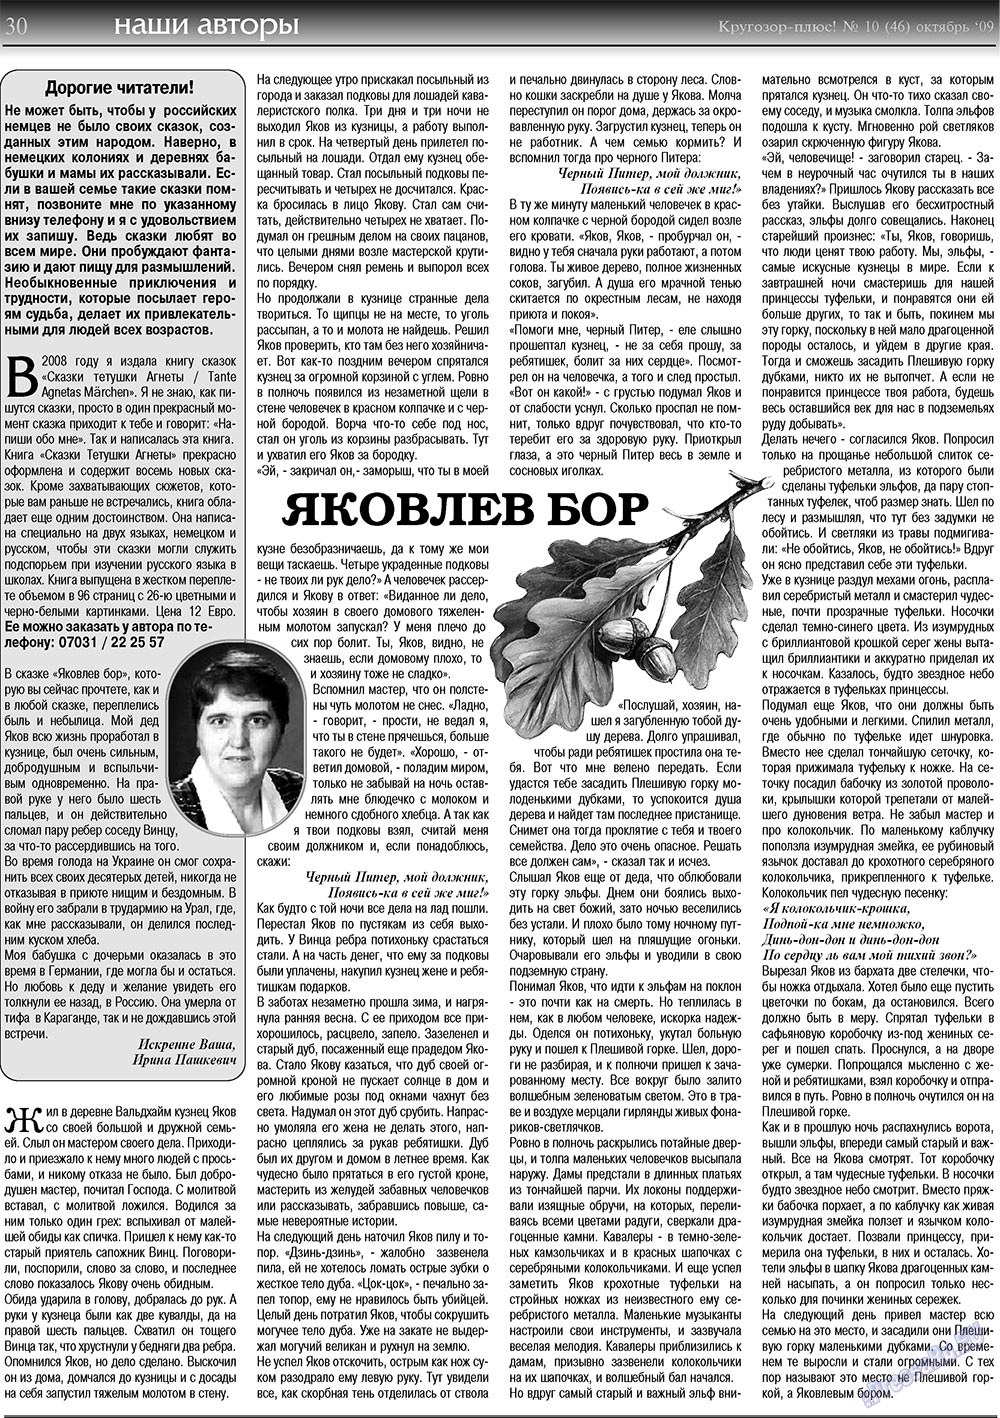 Кругозор плюс! (газета). 2009 год, номер 10, стр. 30